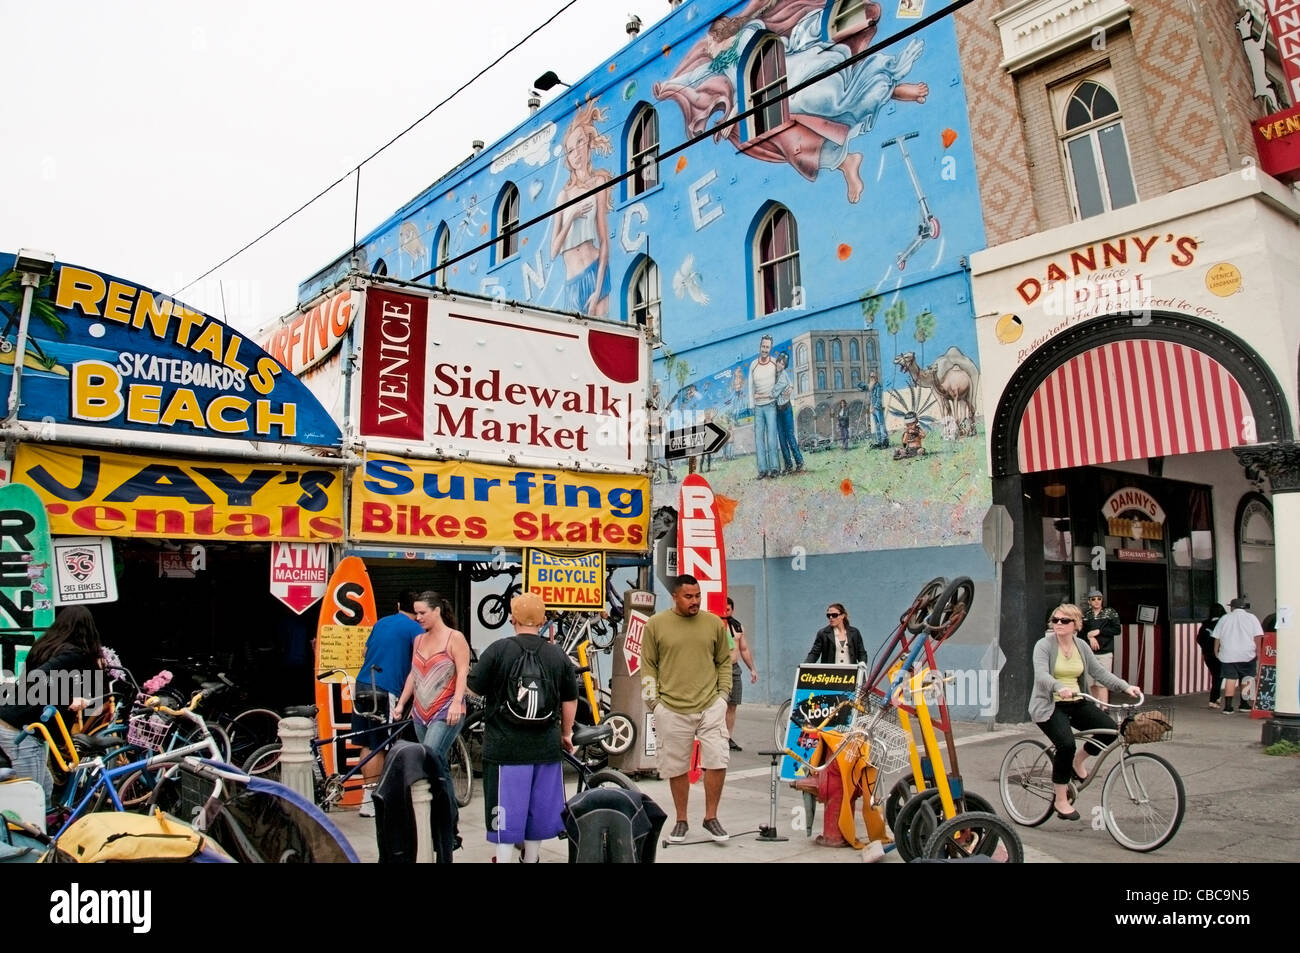 Venice Beach California Rental Furfing Bikes Skates United States Los  Angeles Stock Photo - Alamy